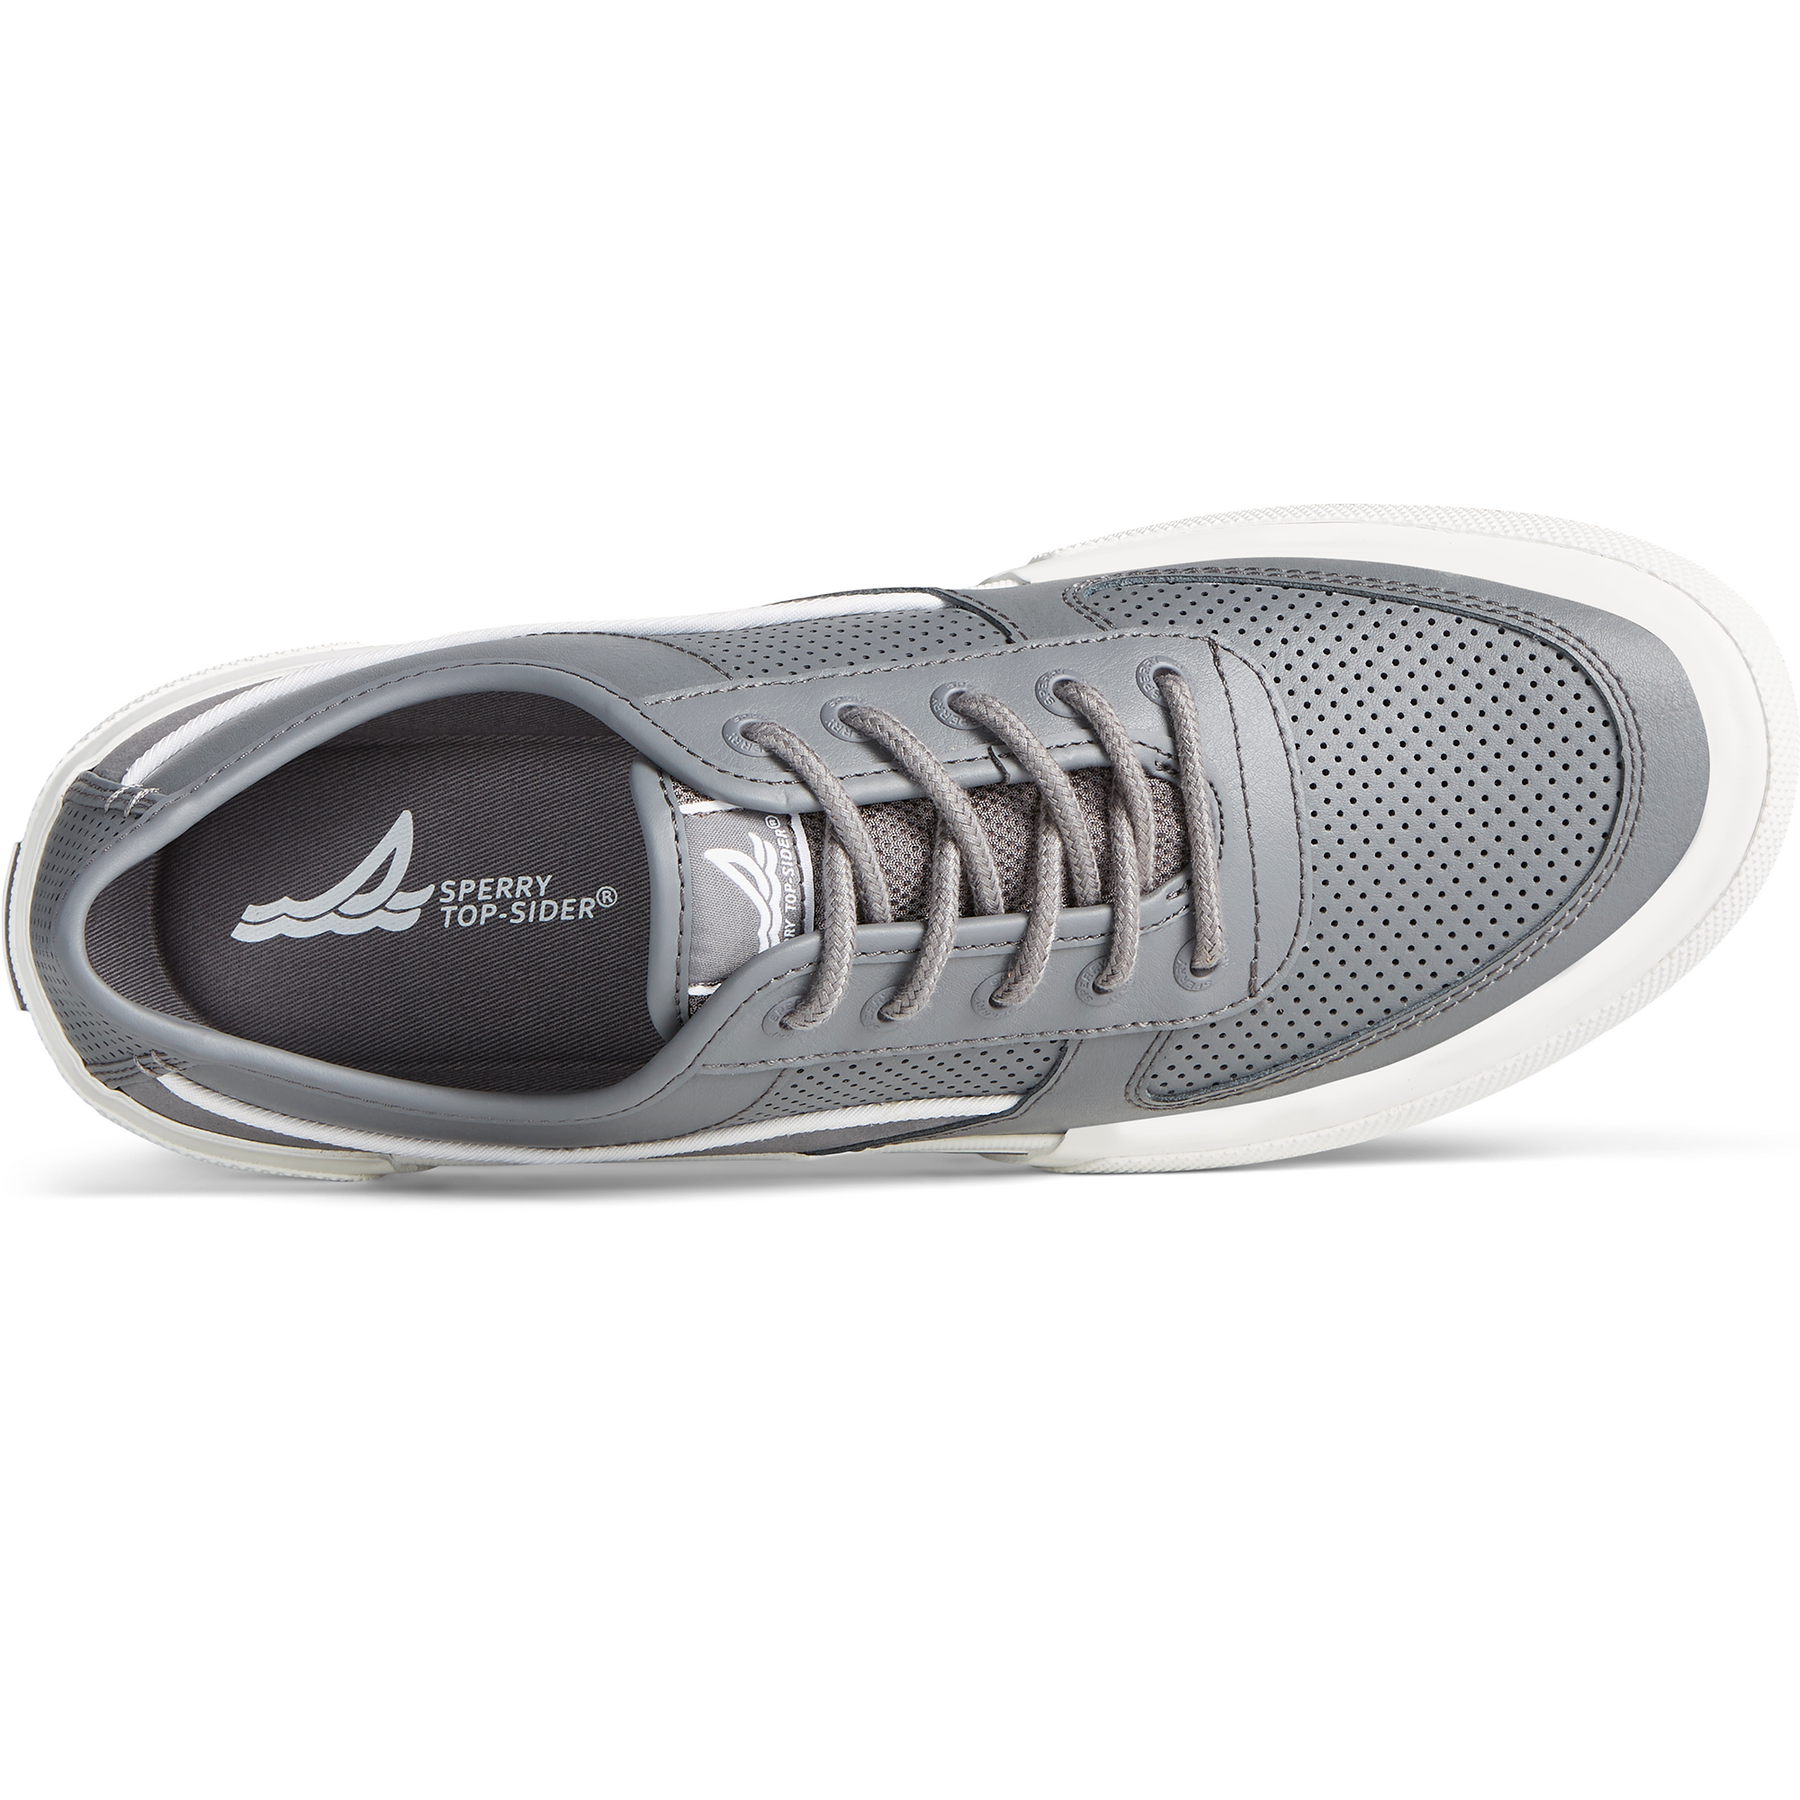 Men's Soletide Retro Sneaker - Grey/White (STS23629)